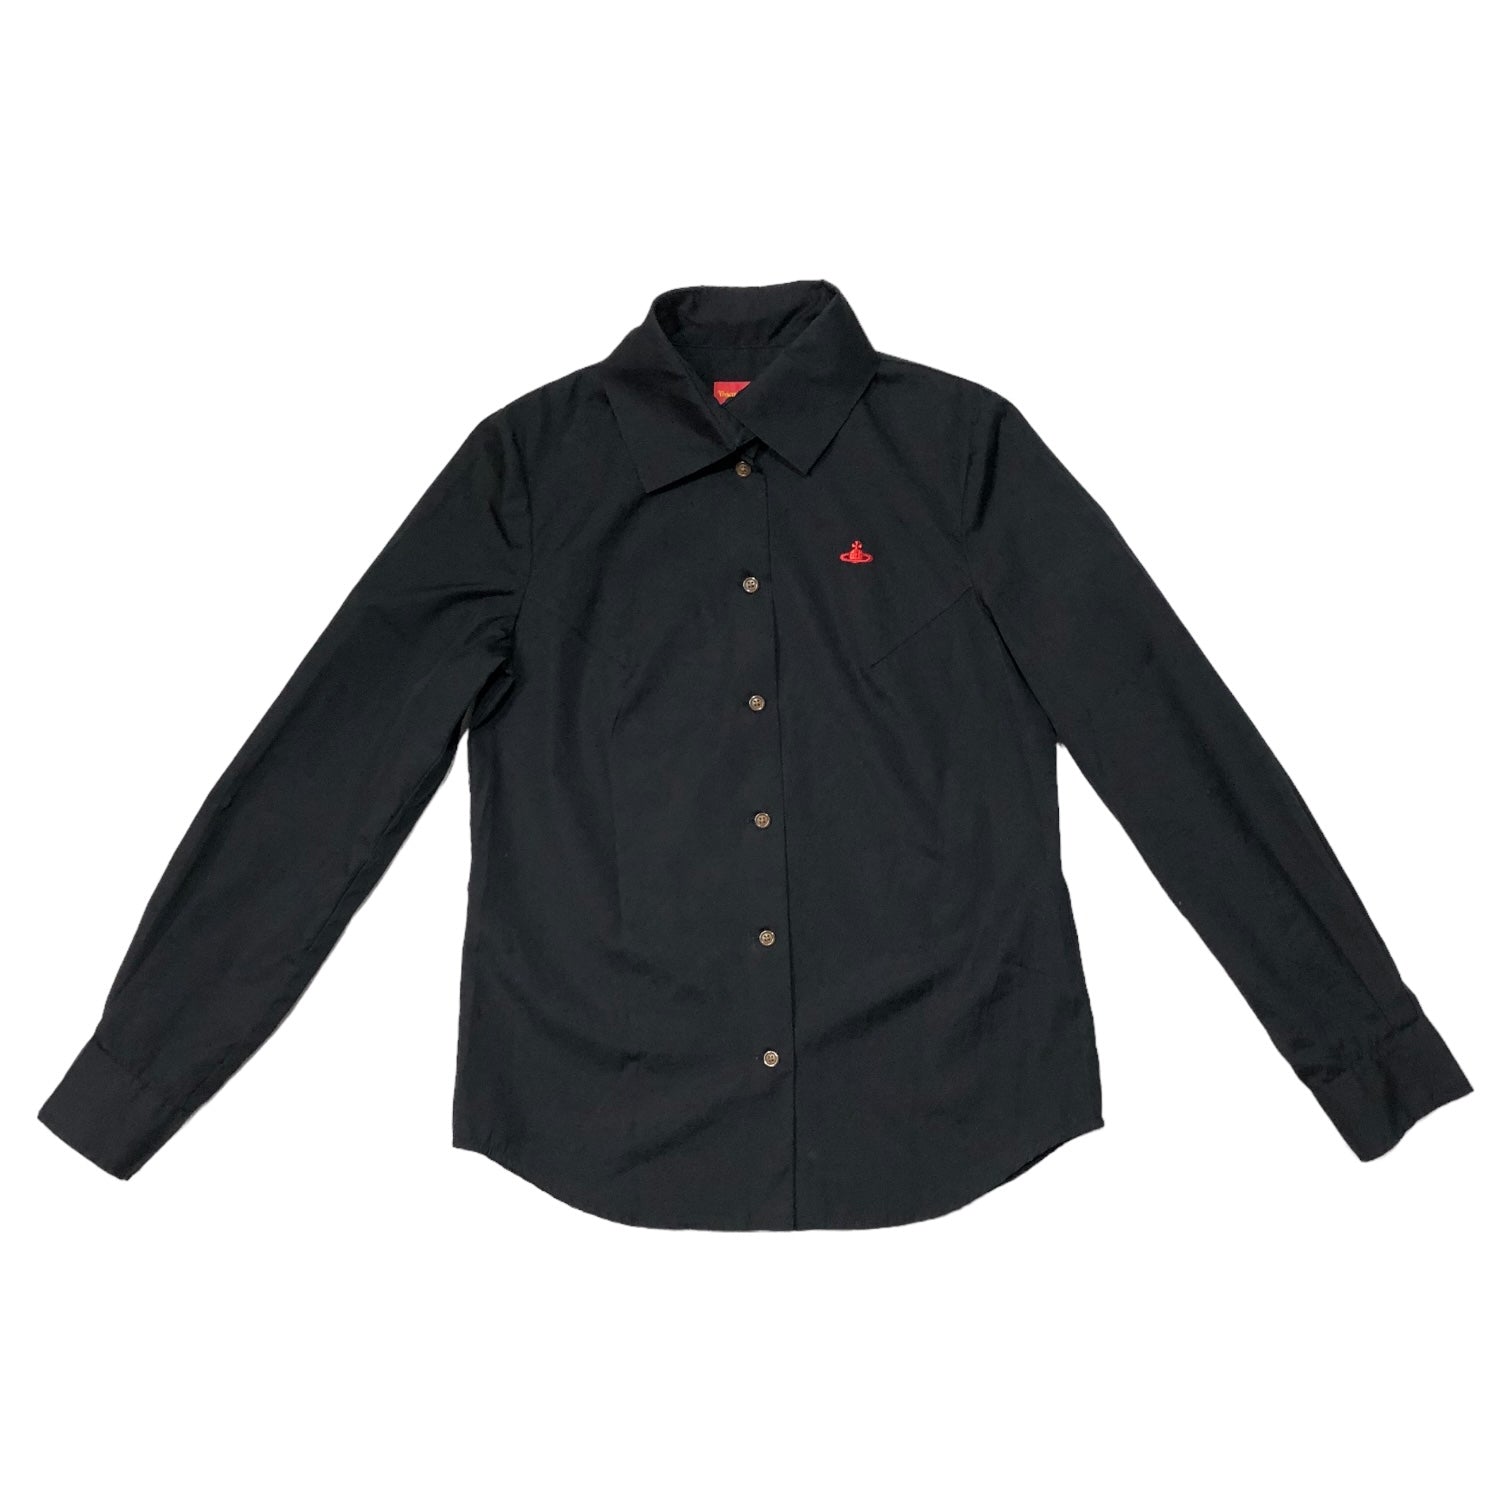 Vivienne Westwood RED LABEL(ヴィヴィアンウエストウッドレッドレーベル) One point orb long sleeve shirt  ワンポイントオーブ長袖シャツ 16-03-862001 2(M程度) ブラック×レッド